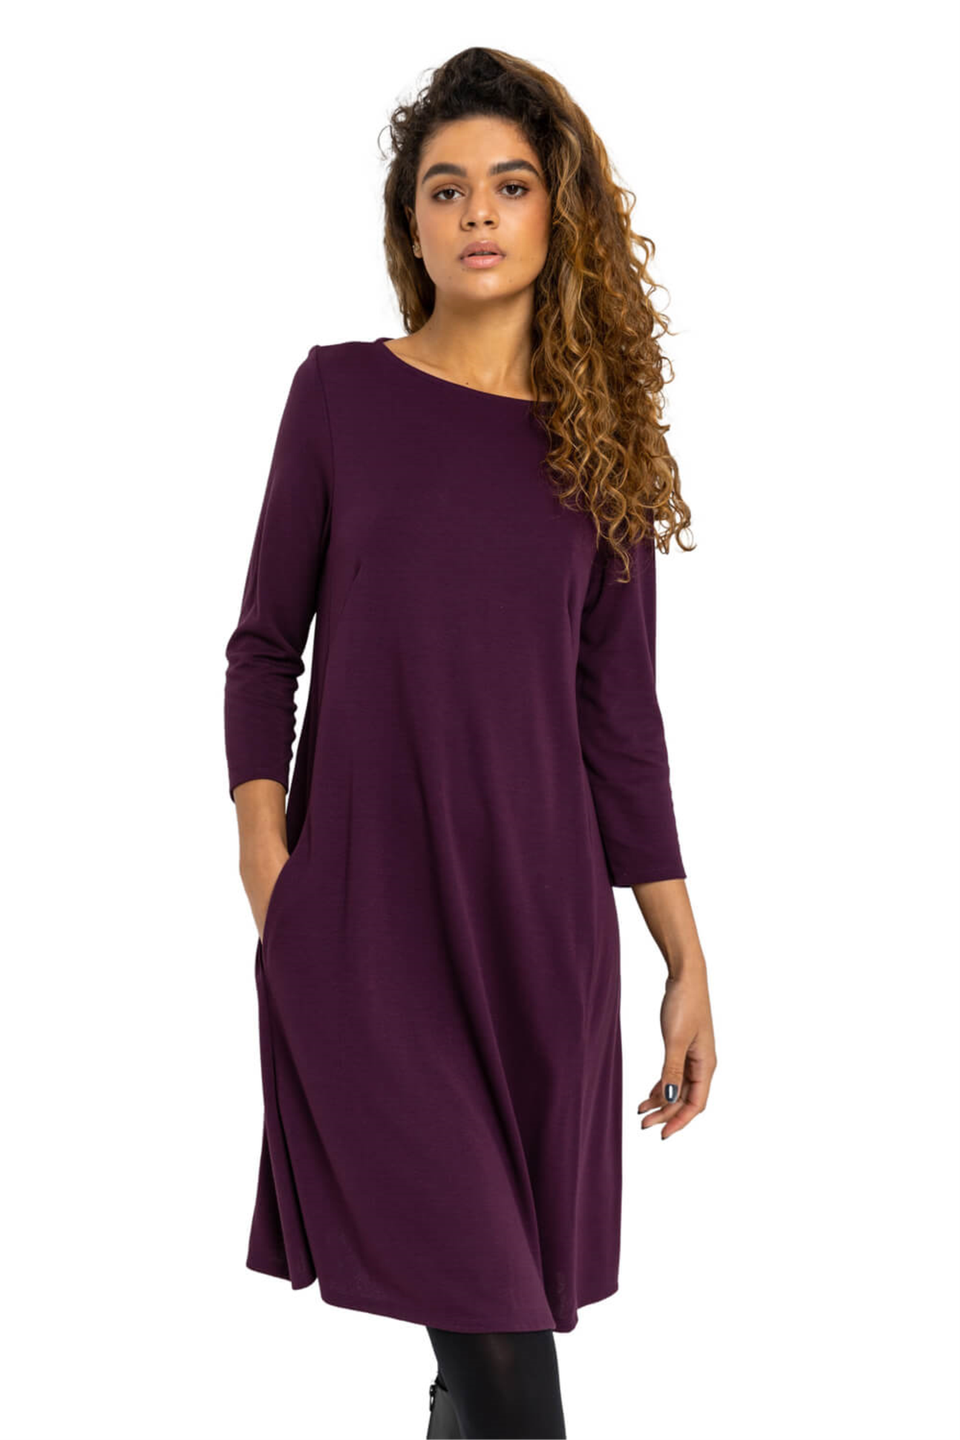 Roman Purple A-Line Pocket Detail Swing Dress - Matalan